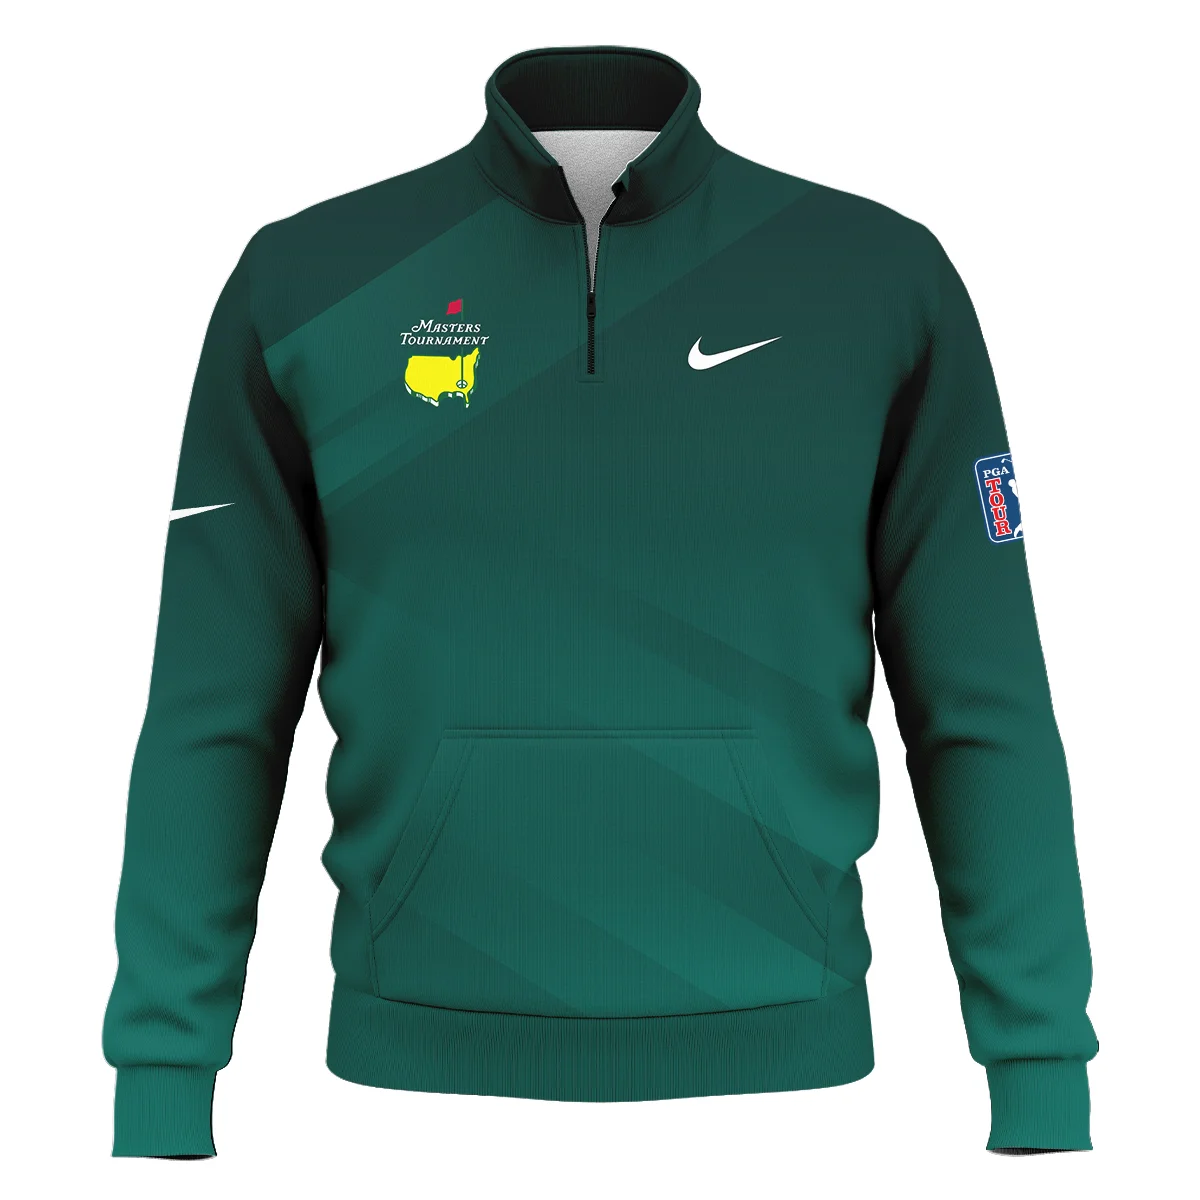 Masters Tournament Dark Green Gradient Golf Sport Nike Style Classic, Short Sleeve Polo Shirts Quarter-Zip Casual Slim Fit Mock Neck Basic